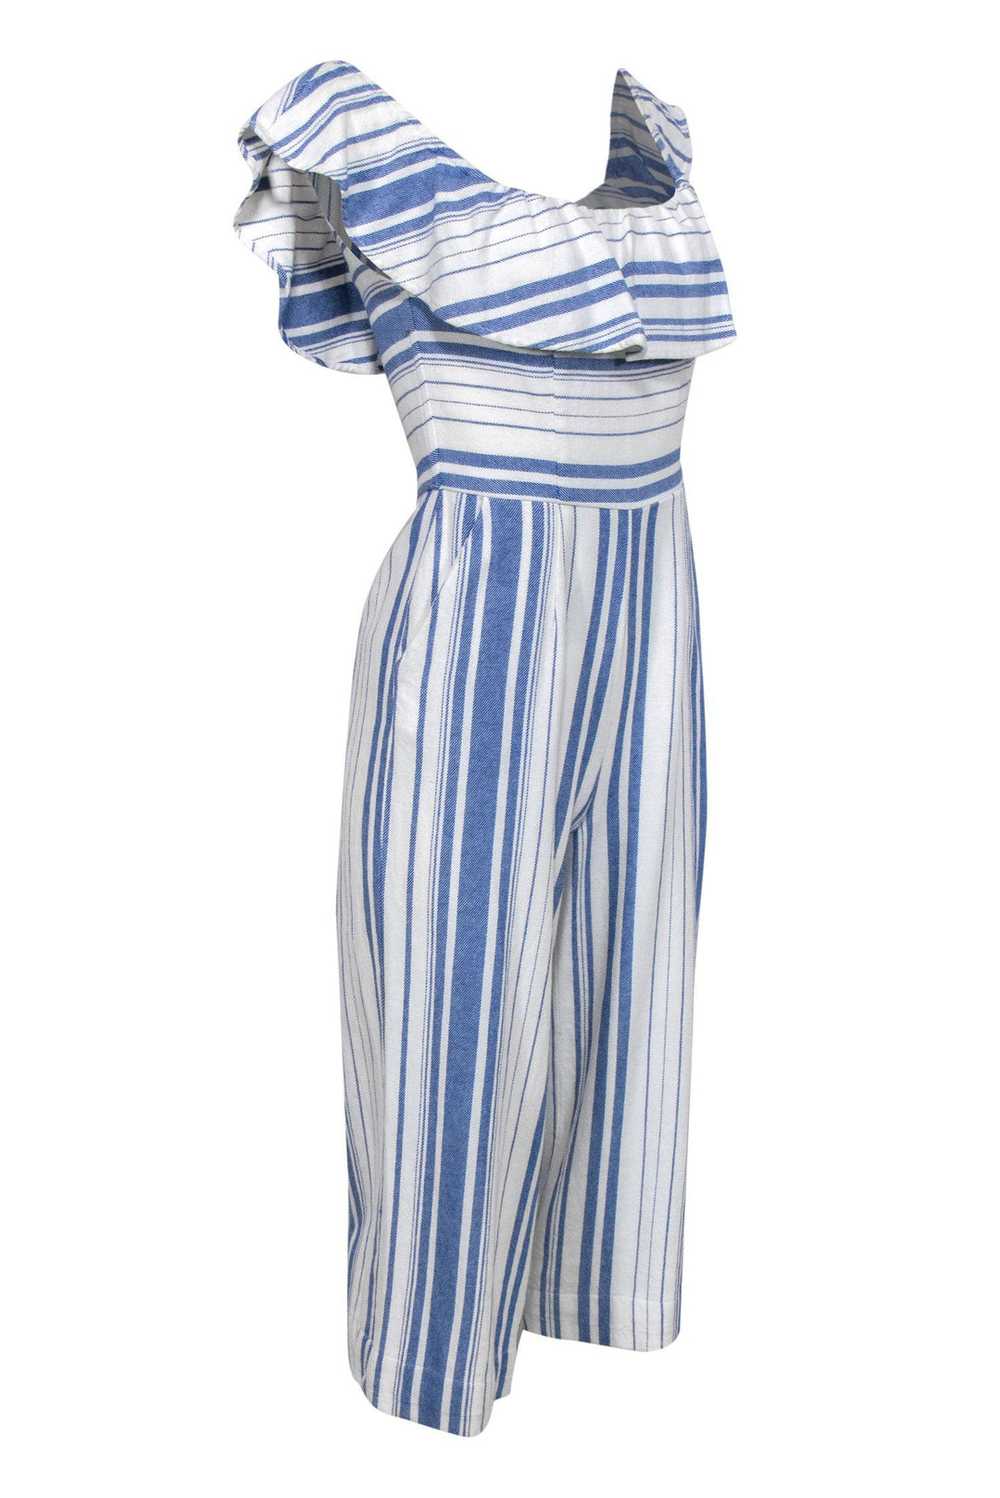 Joie - Blue & White Striped Sleeveless Wide Leg J… - image 2